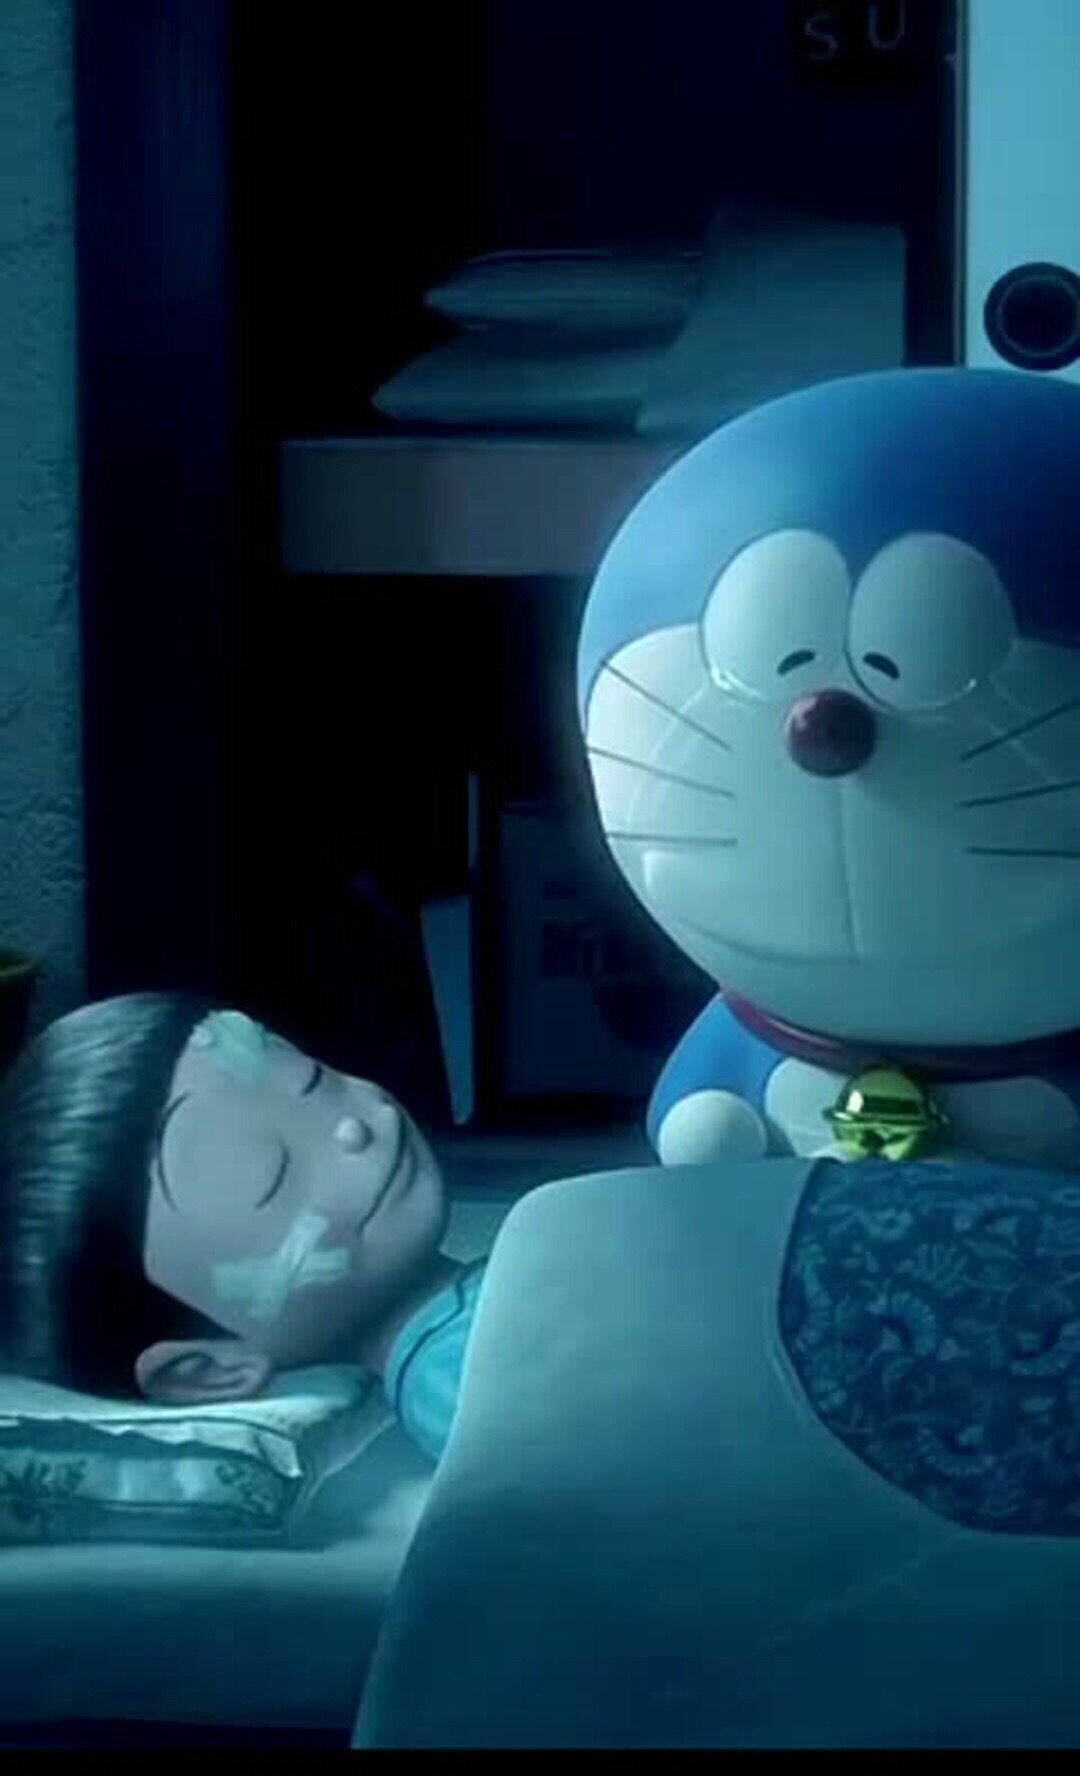 Doraemon Watching Over Cute Nobita Picture